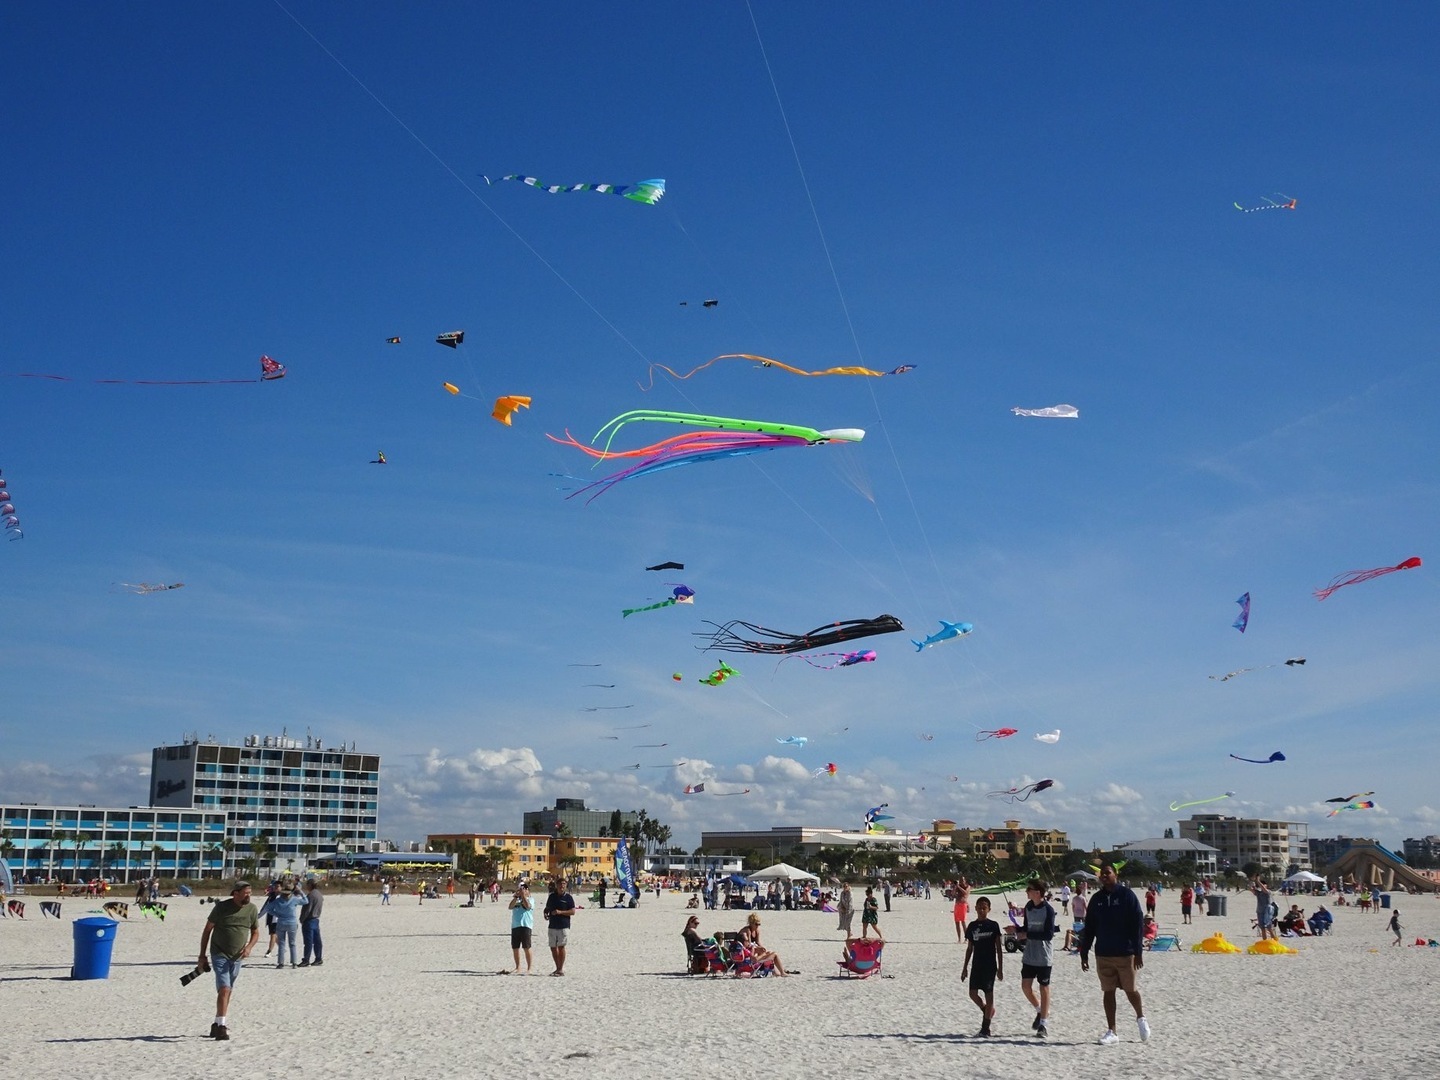 27th Annual Treasure Island Sport Kite Competition and Festival, Treasure Island, Florida, United States